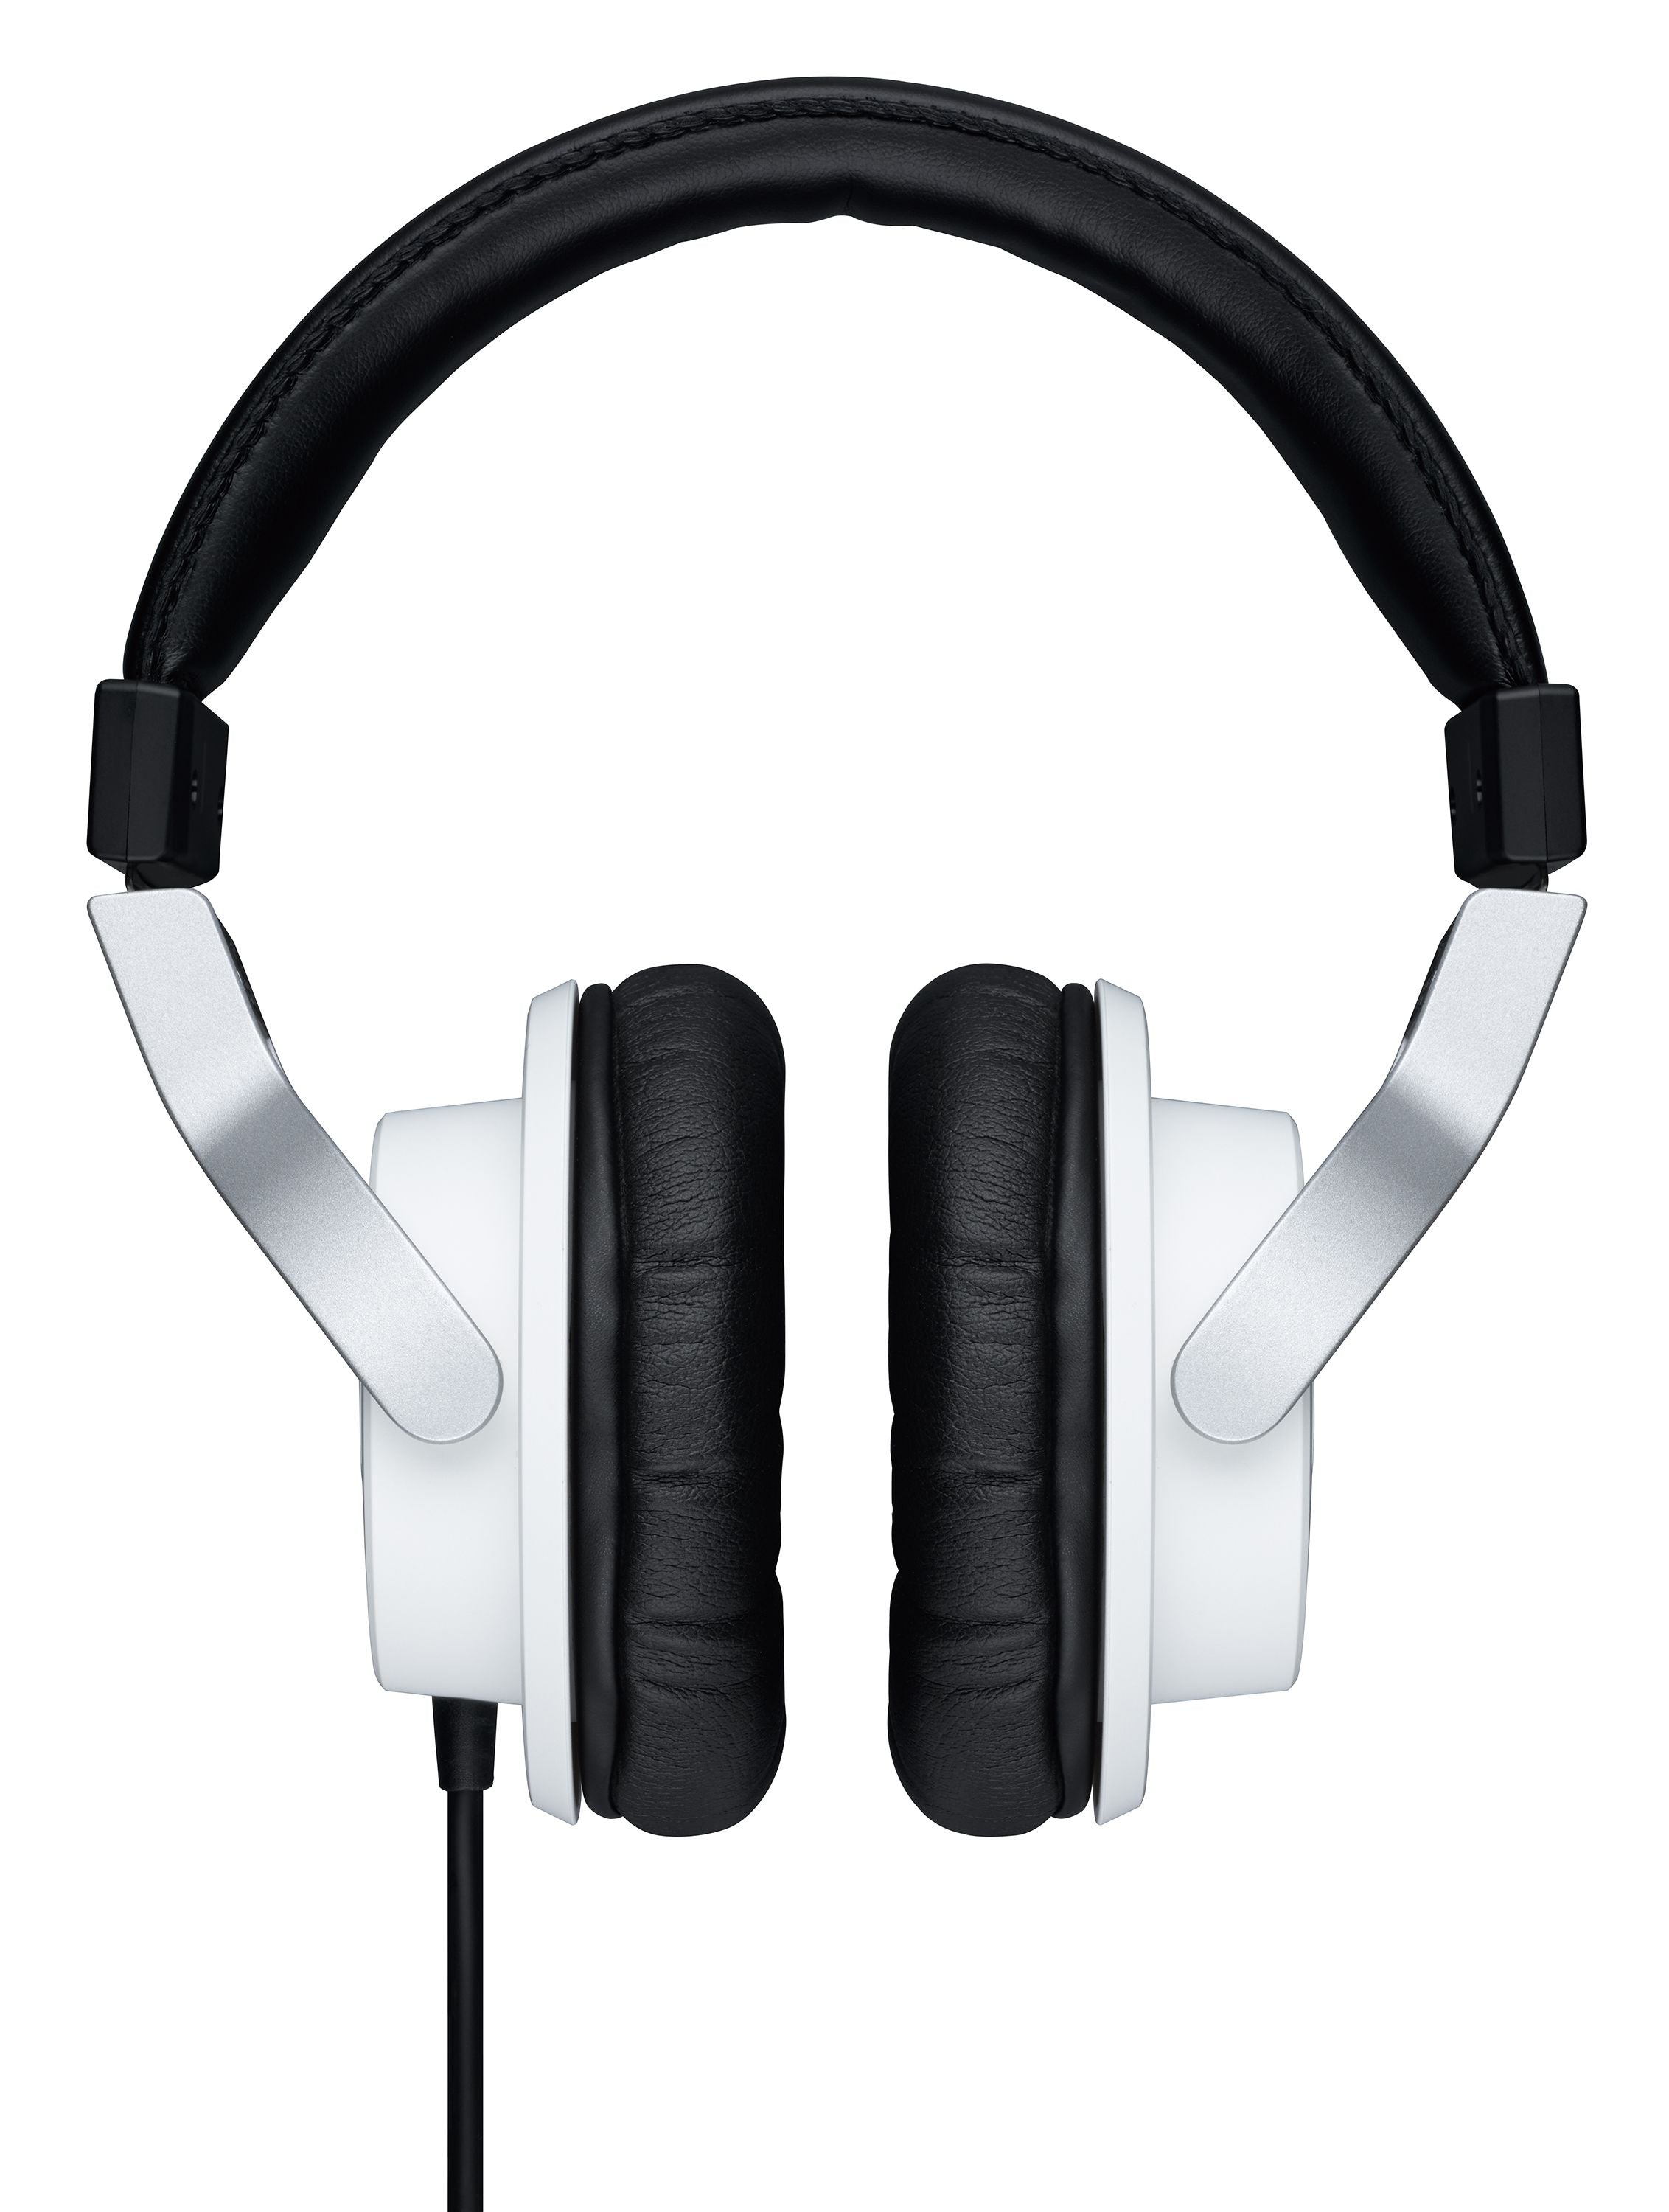 Yamaha HPH-MT7 Studio Monitor Headphones, Black